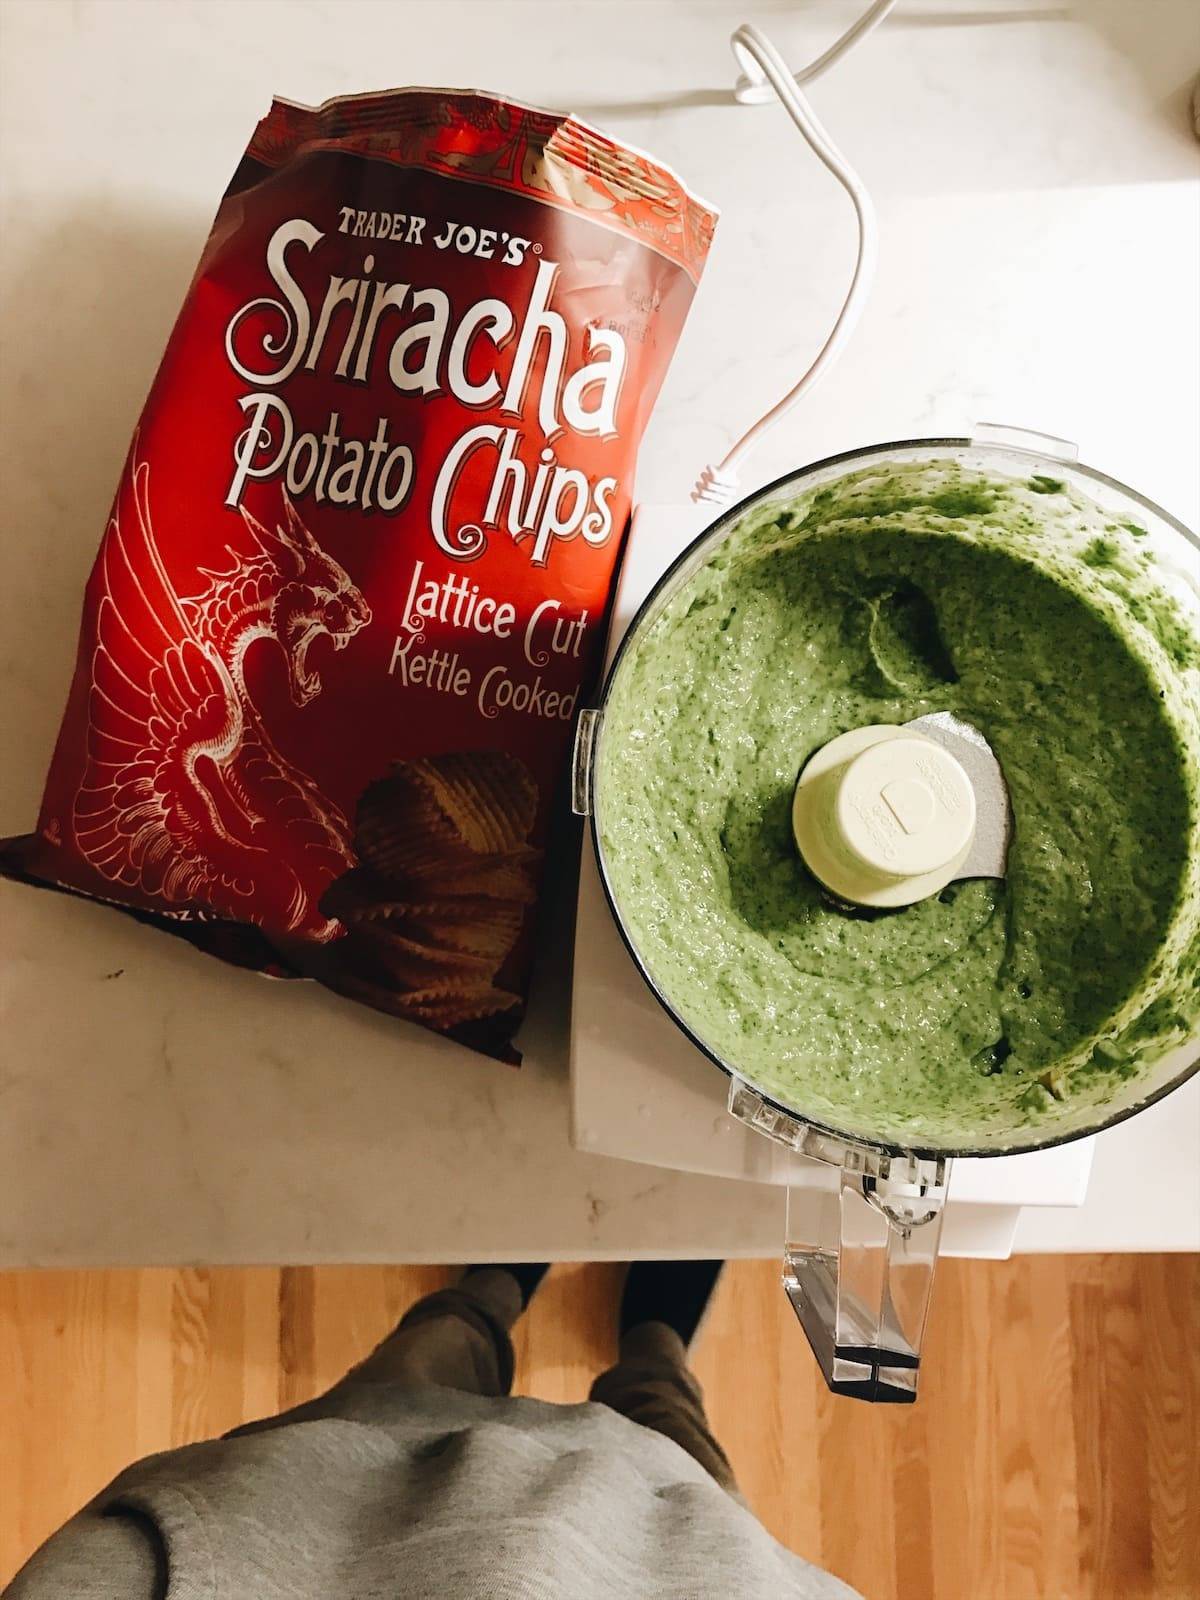 Homemade guacamole with sriracha potato chips on the counter.